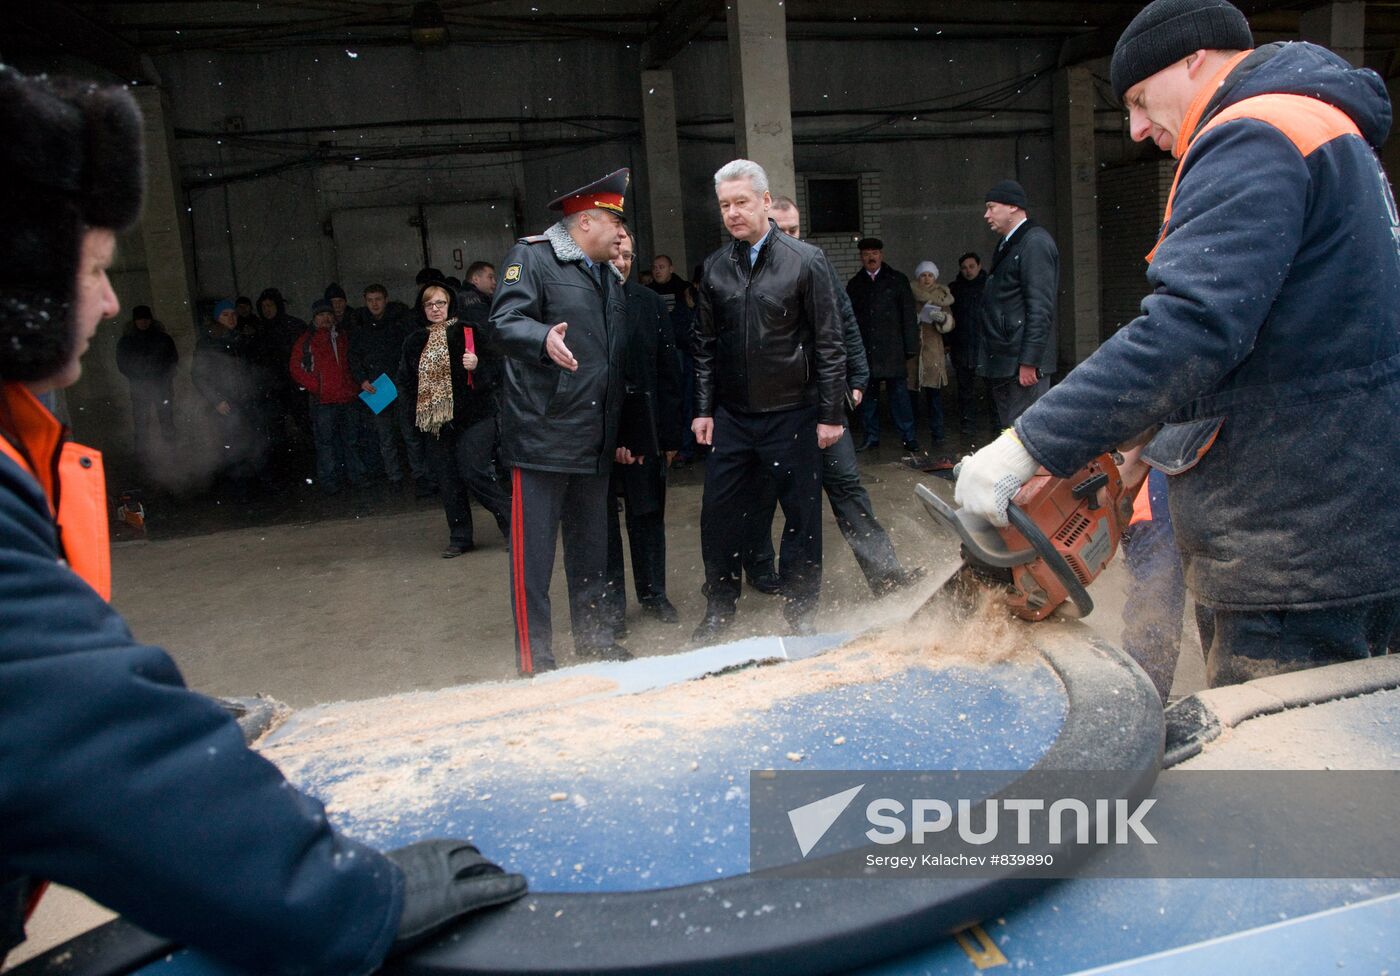 Sergei Sobyanin holds Saturday's city inspection tour